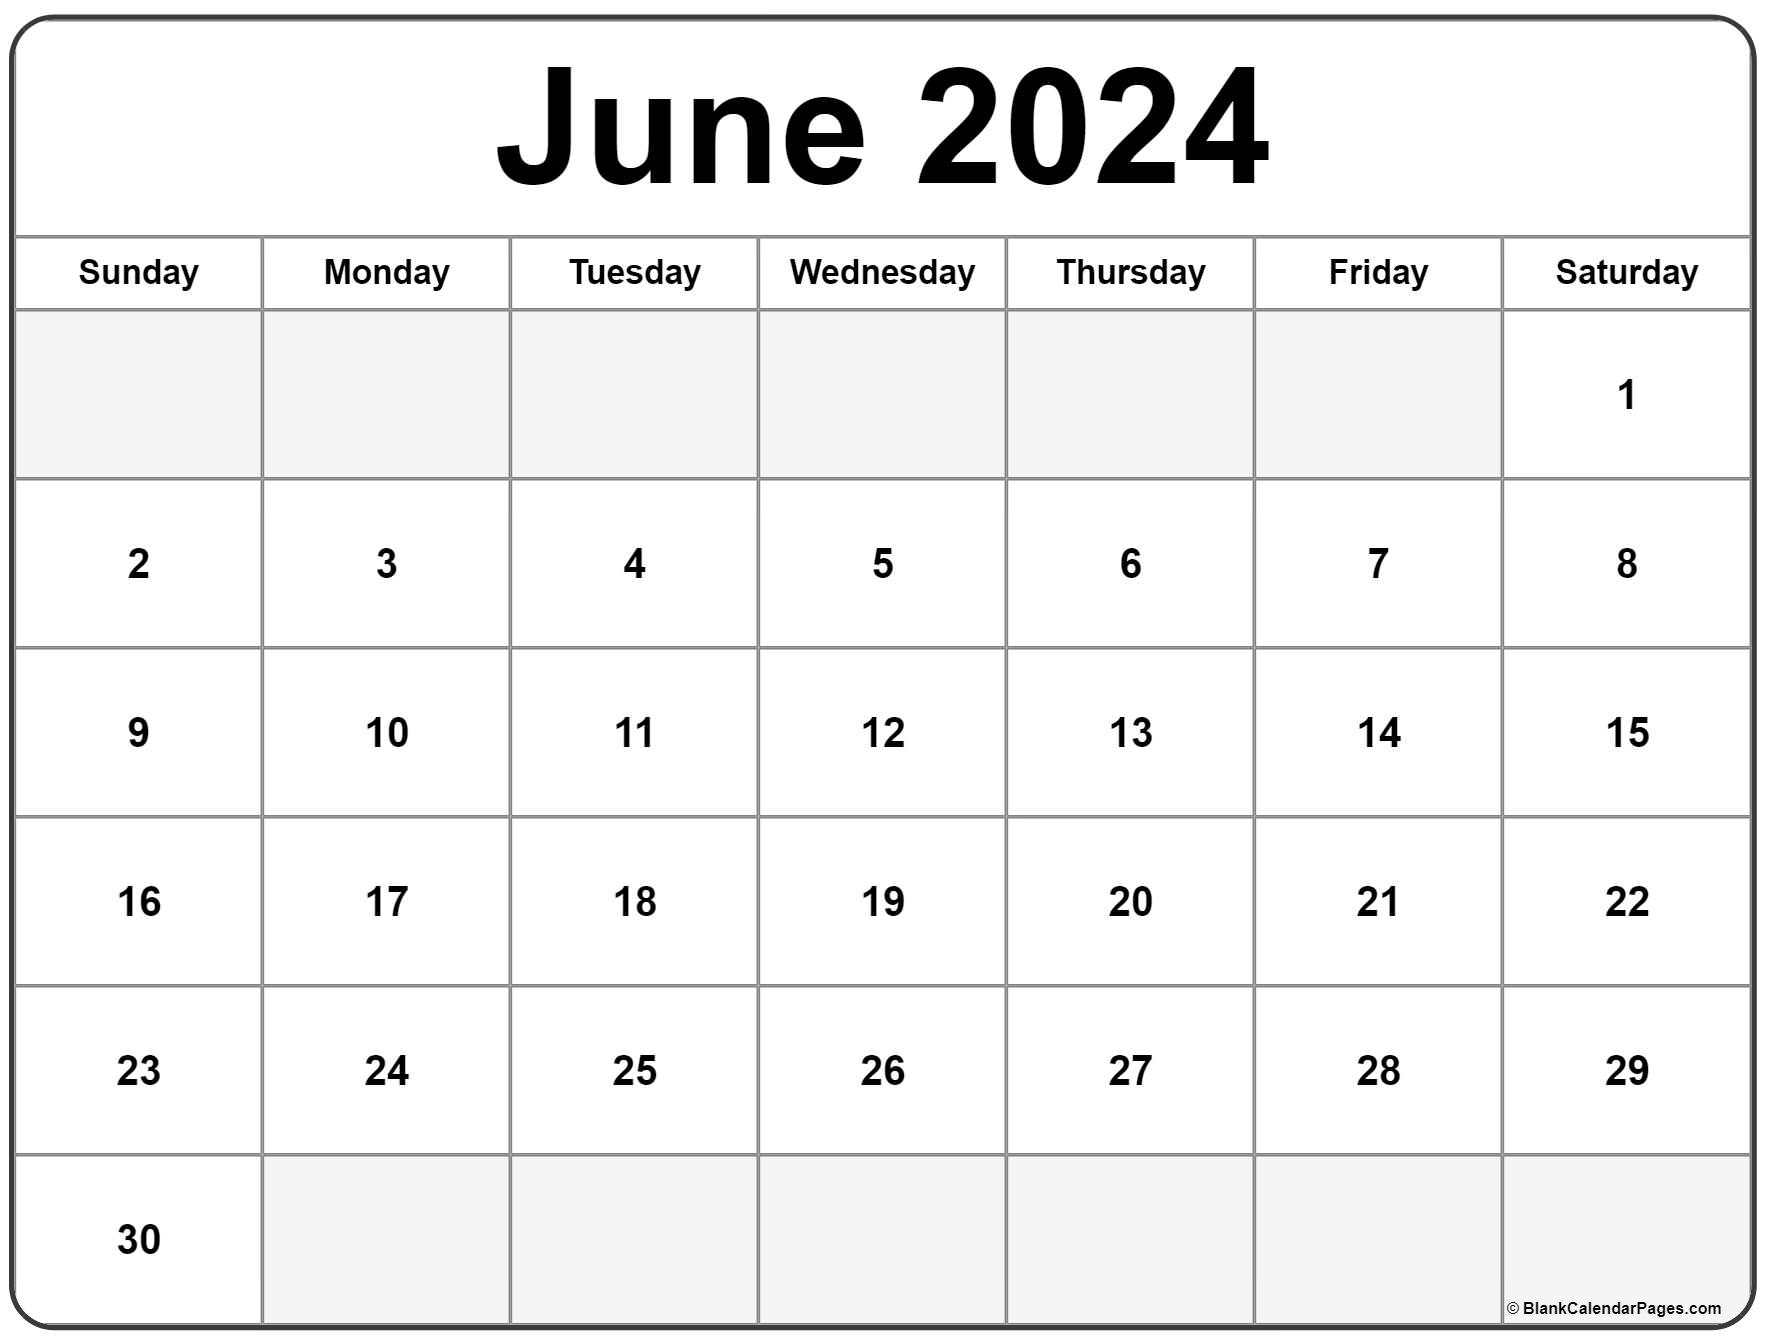 June 2022 calendar free printable calendar templates